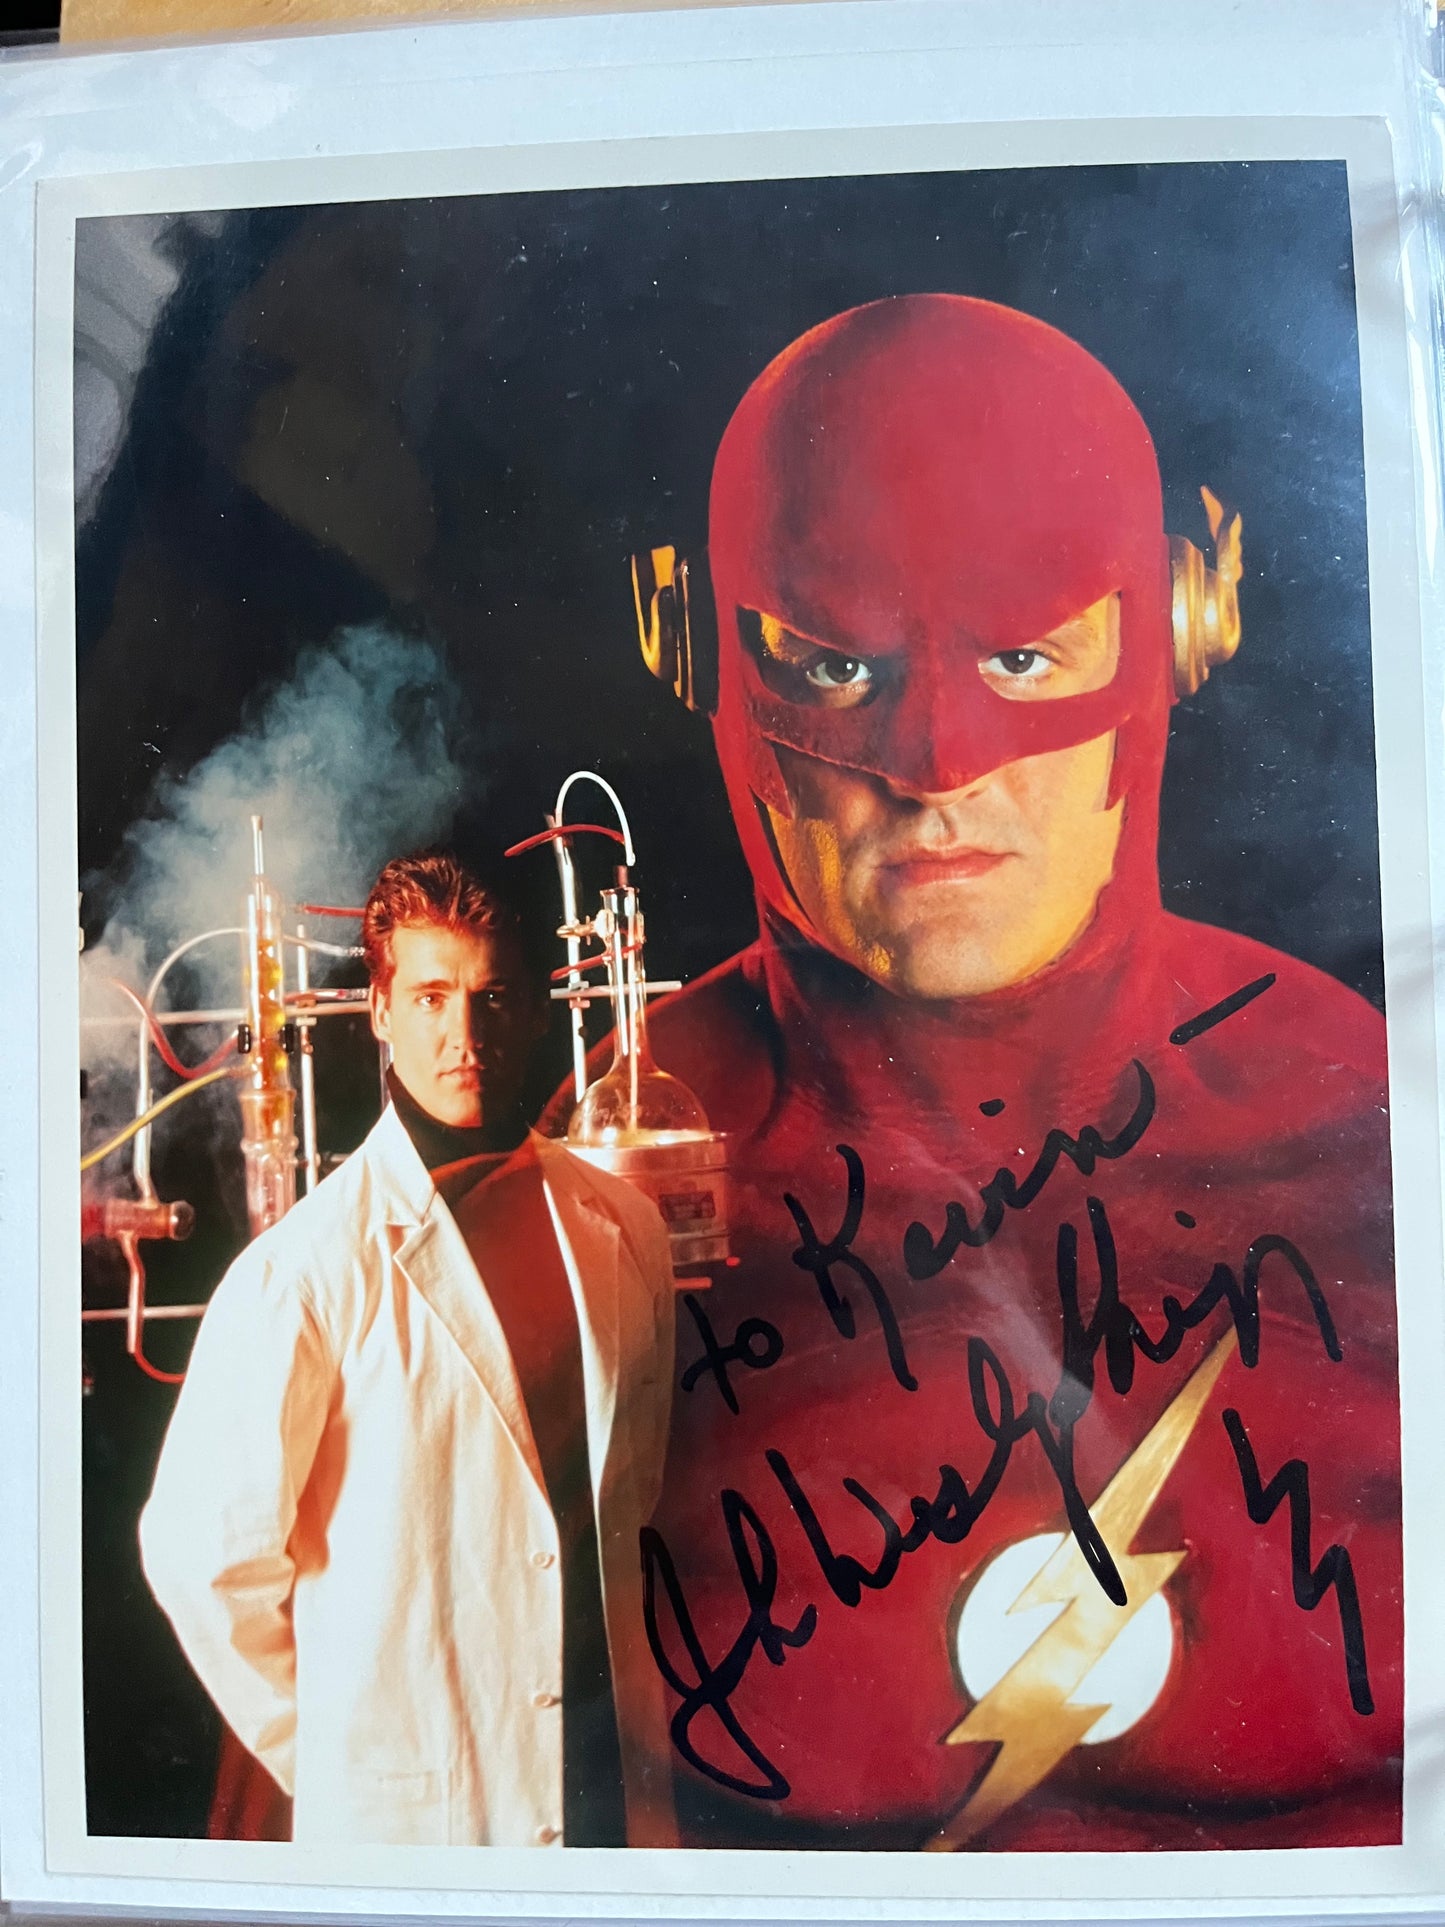 JOHN WESLEY SHIPP, star of The Flash, autograph